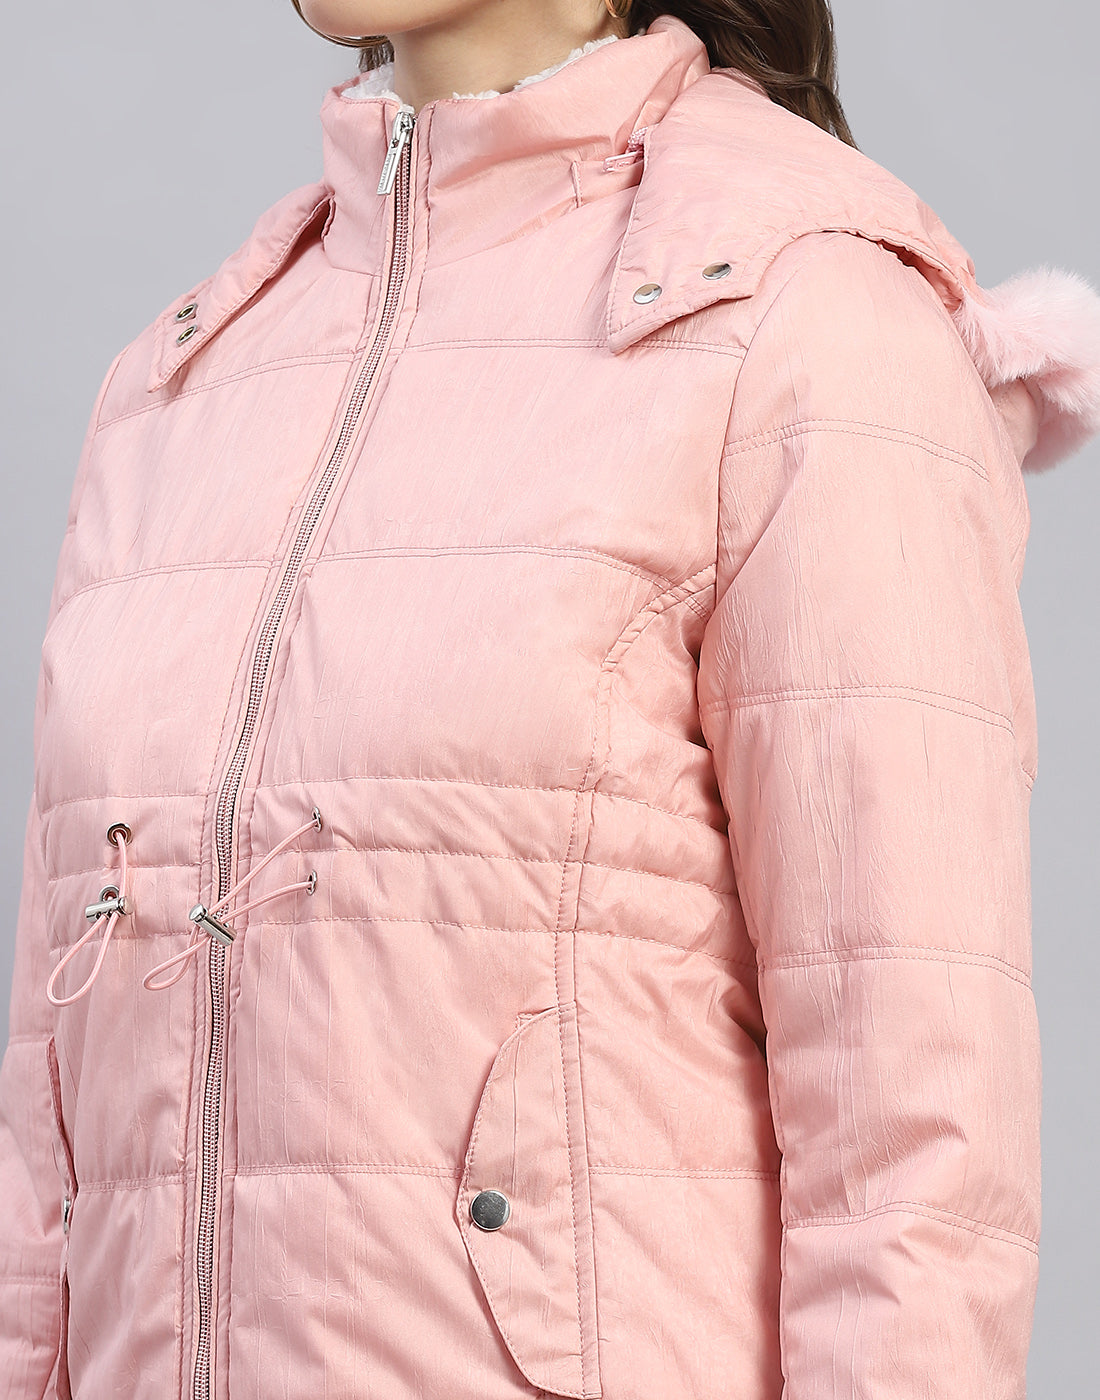 Buy Women Pink Solid Hooded Full Sleeve Jacket Online in India - Monte Carlo